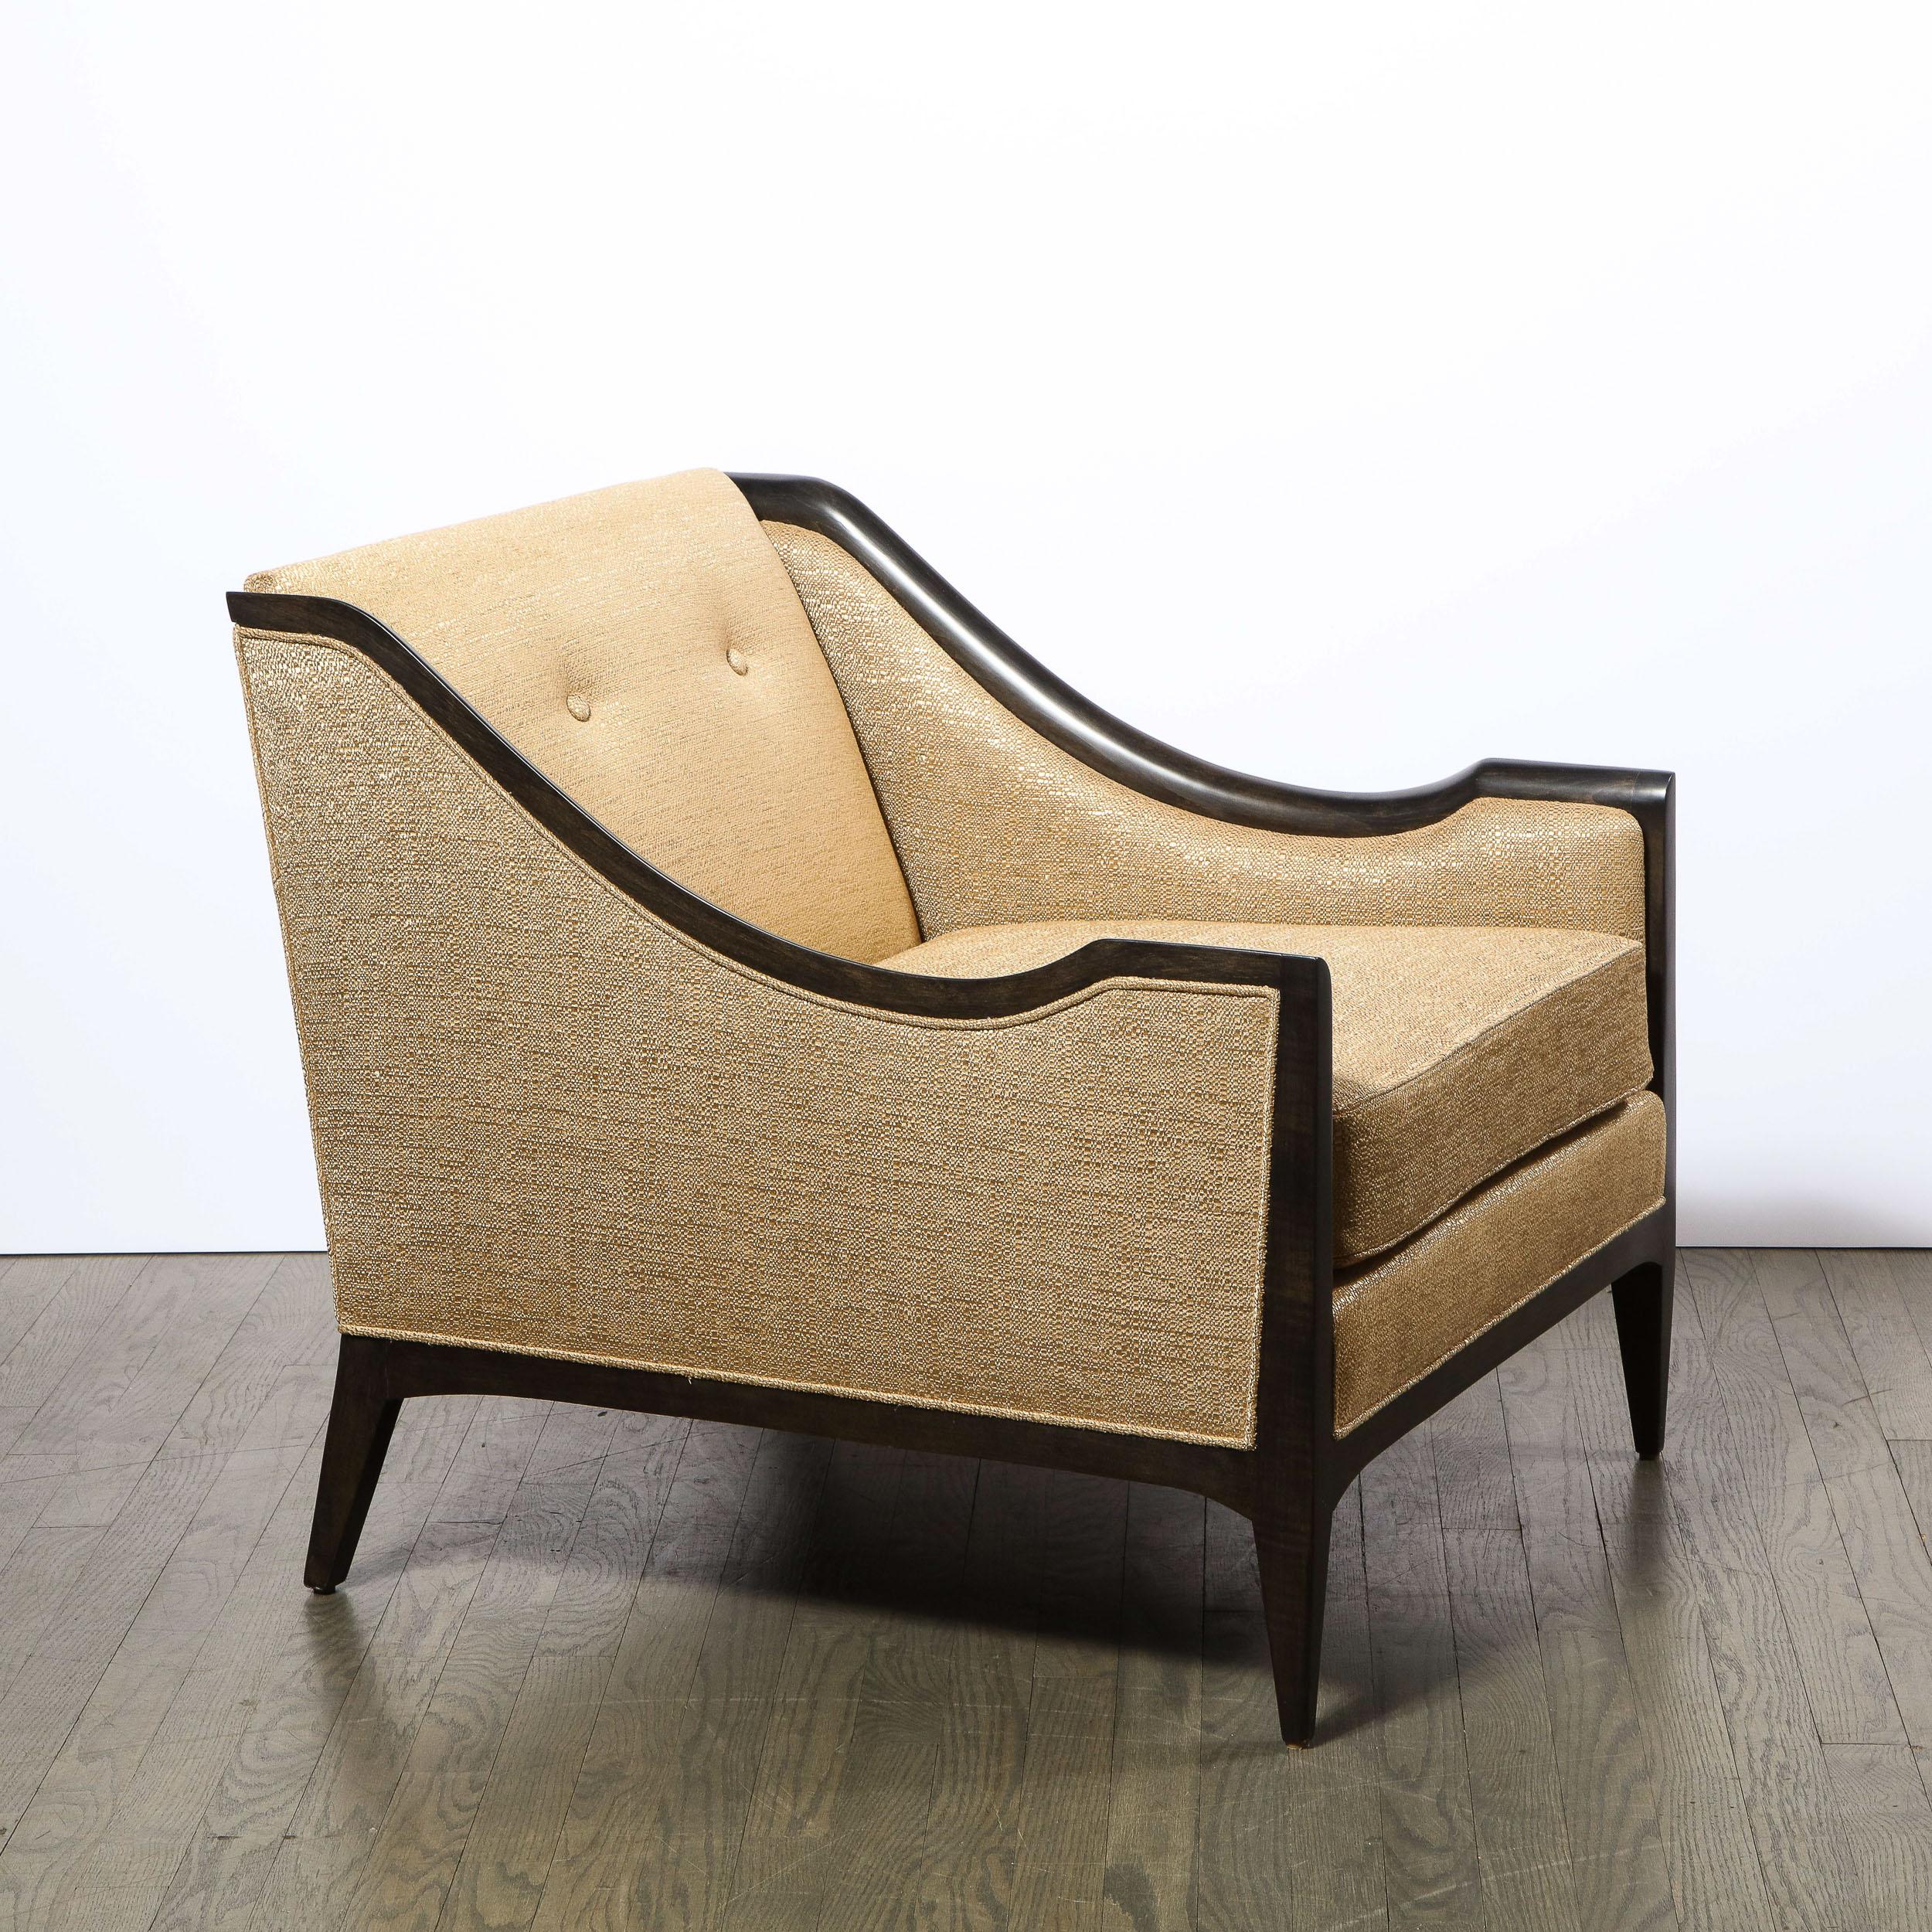 Mid-20th Century Pair of Mid-Century Modern Ebonized Walnut Club Chairs in Gold Holly Hunt Fabric